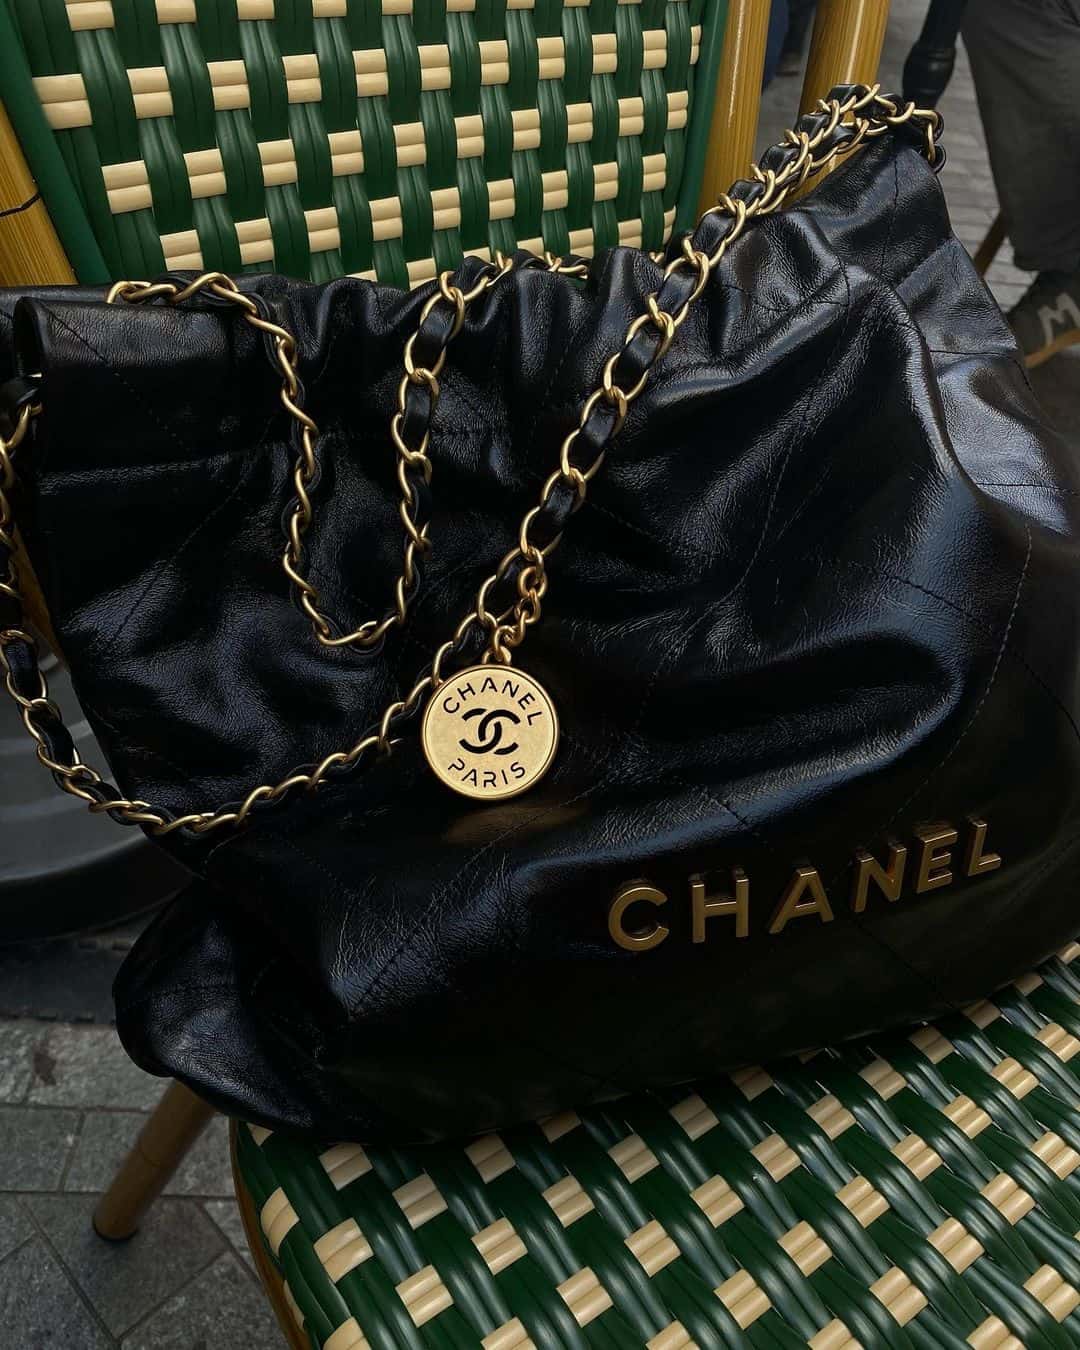 Closeup of the Black Chanel 22 bag